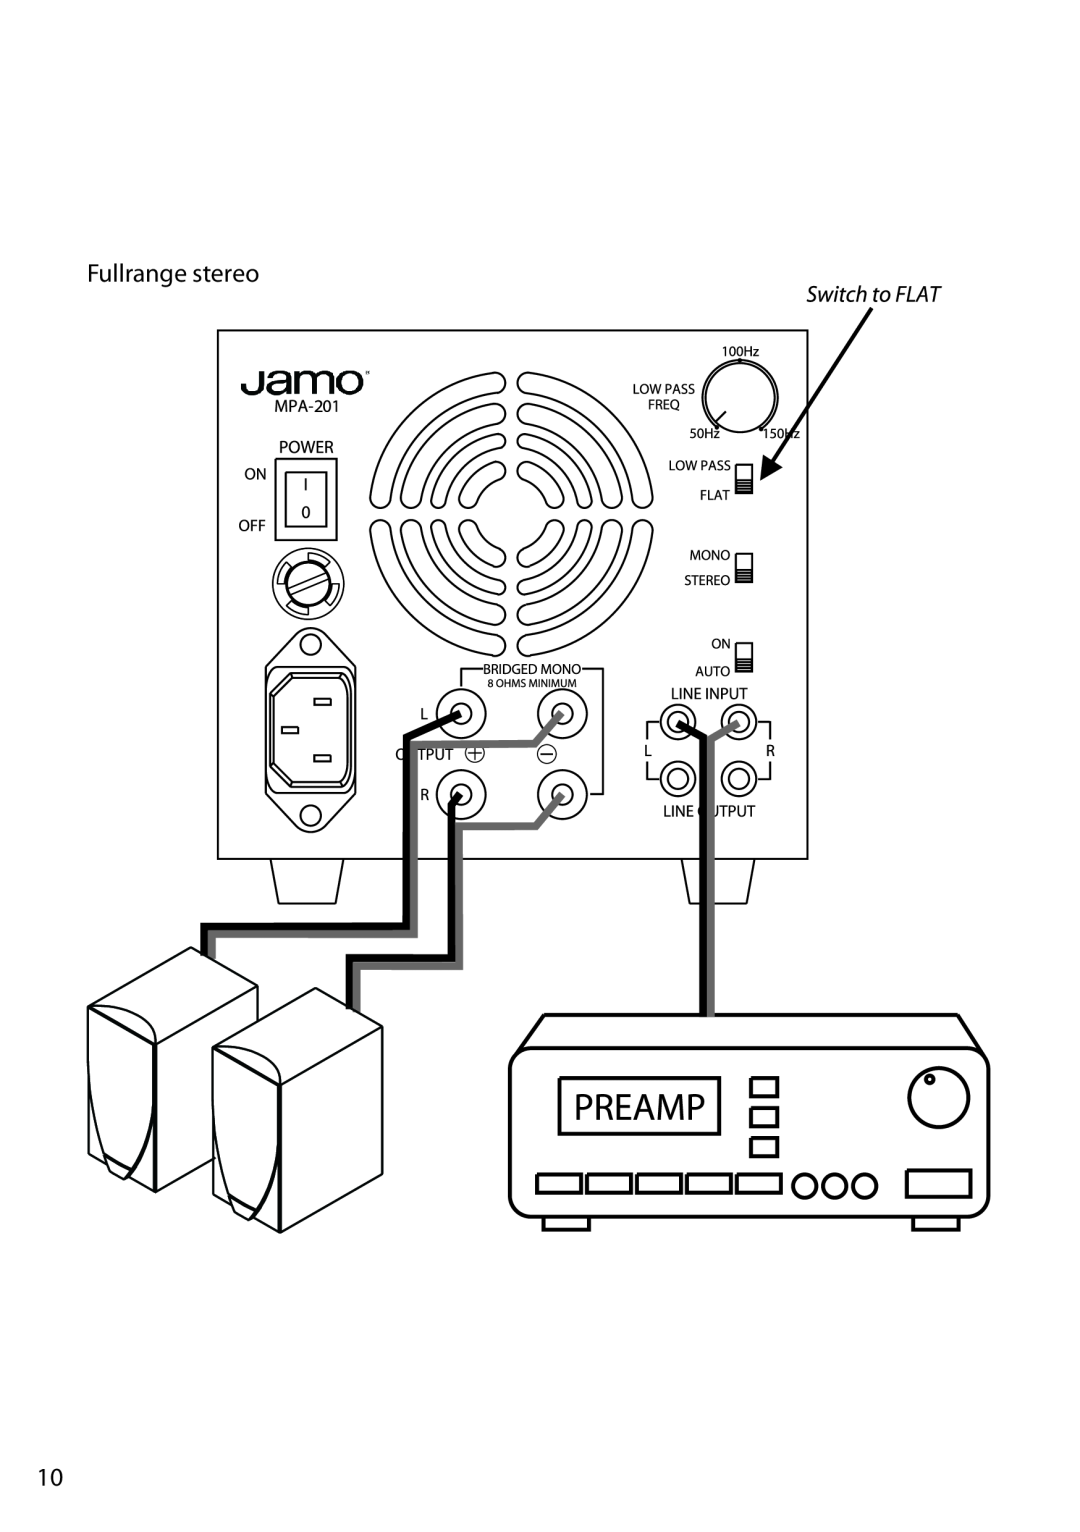 JAMO MPA-201 manual Fullrange stereo 